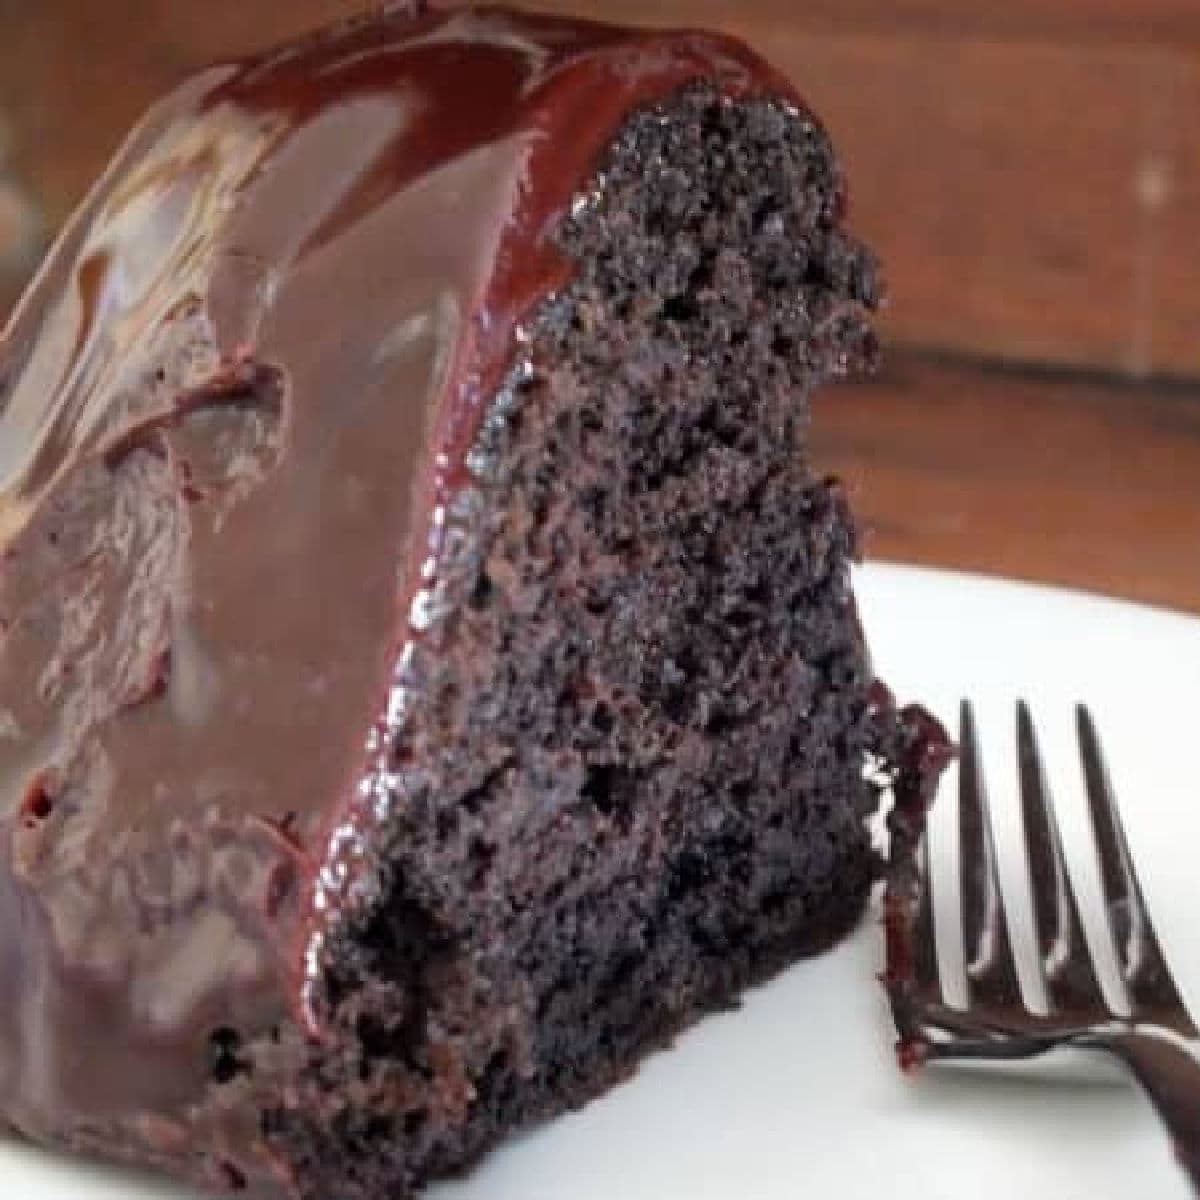 A slice of Guinness Chocolate bundt cake on a plate.